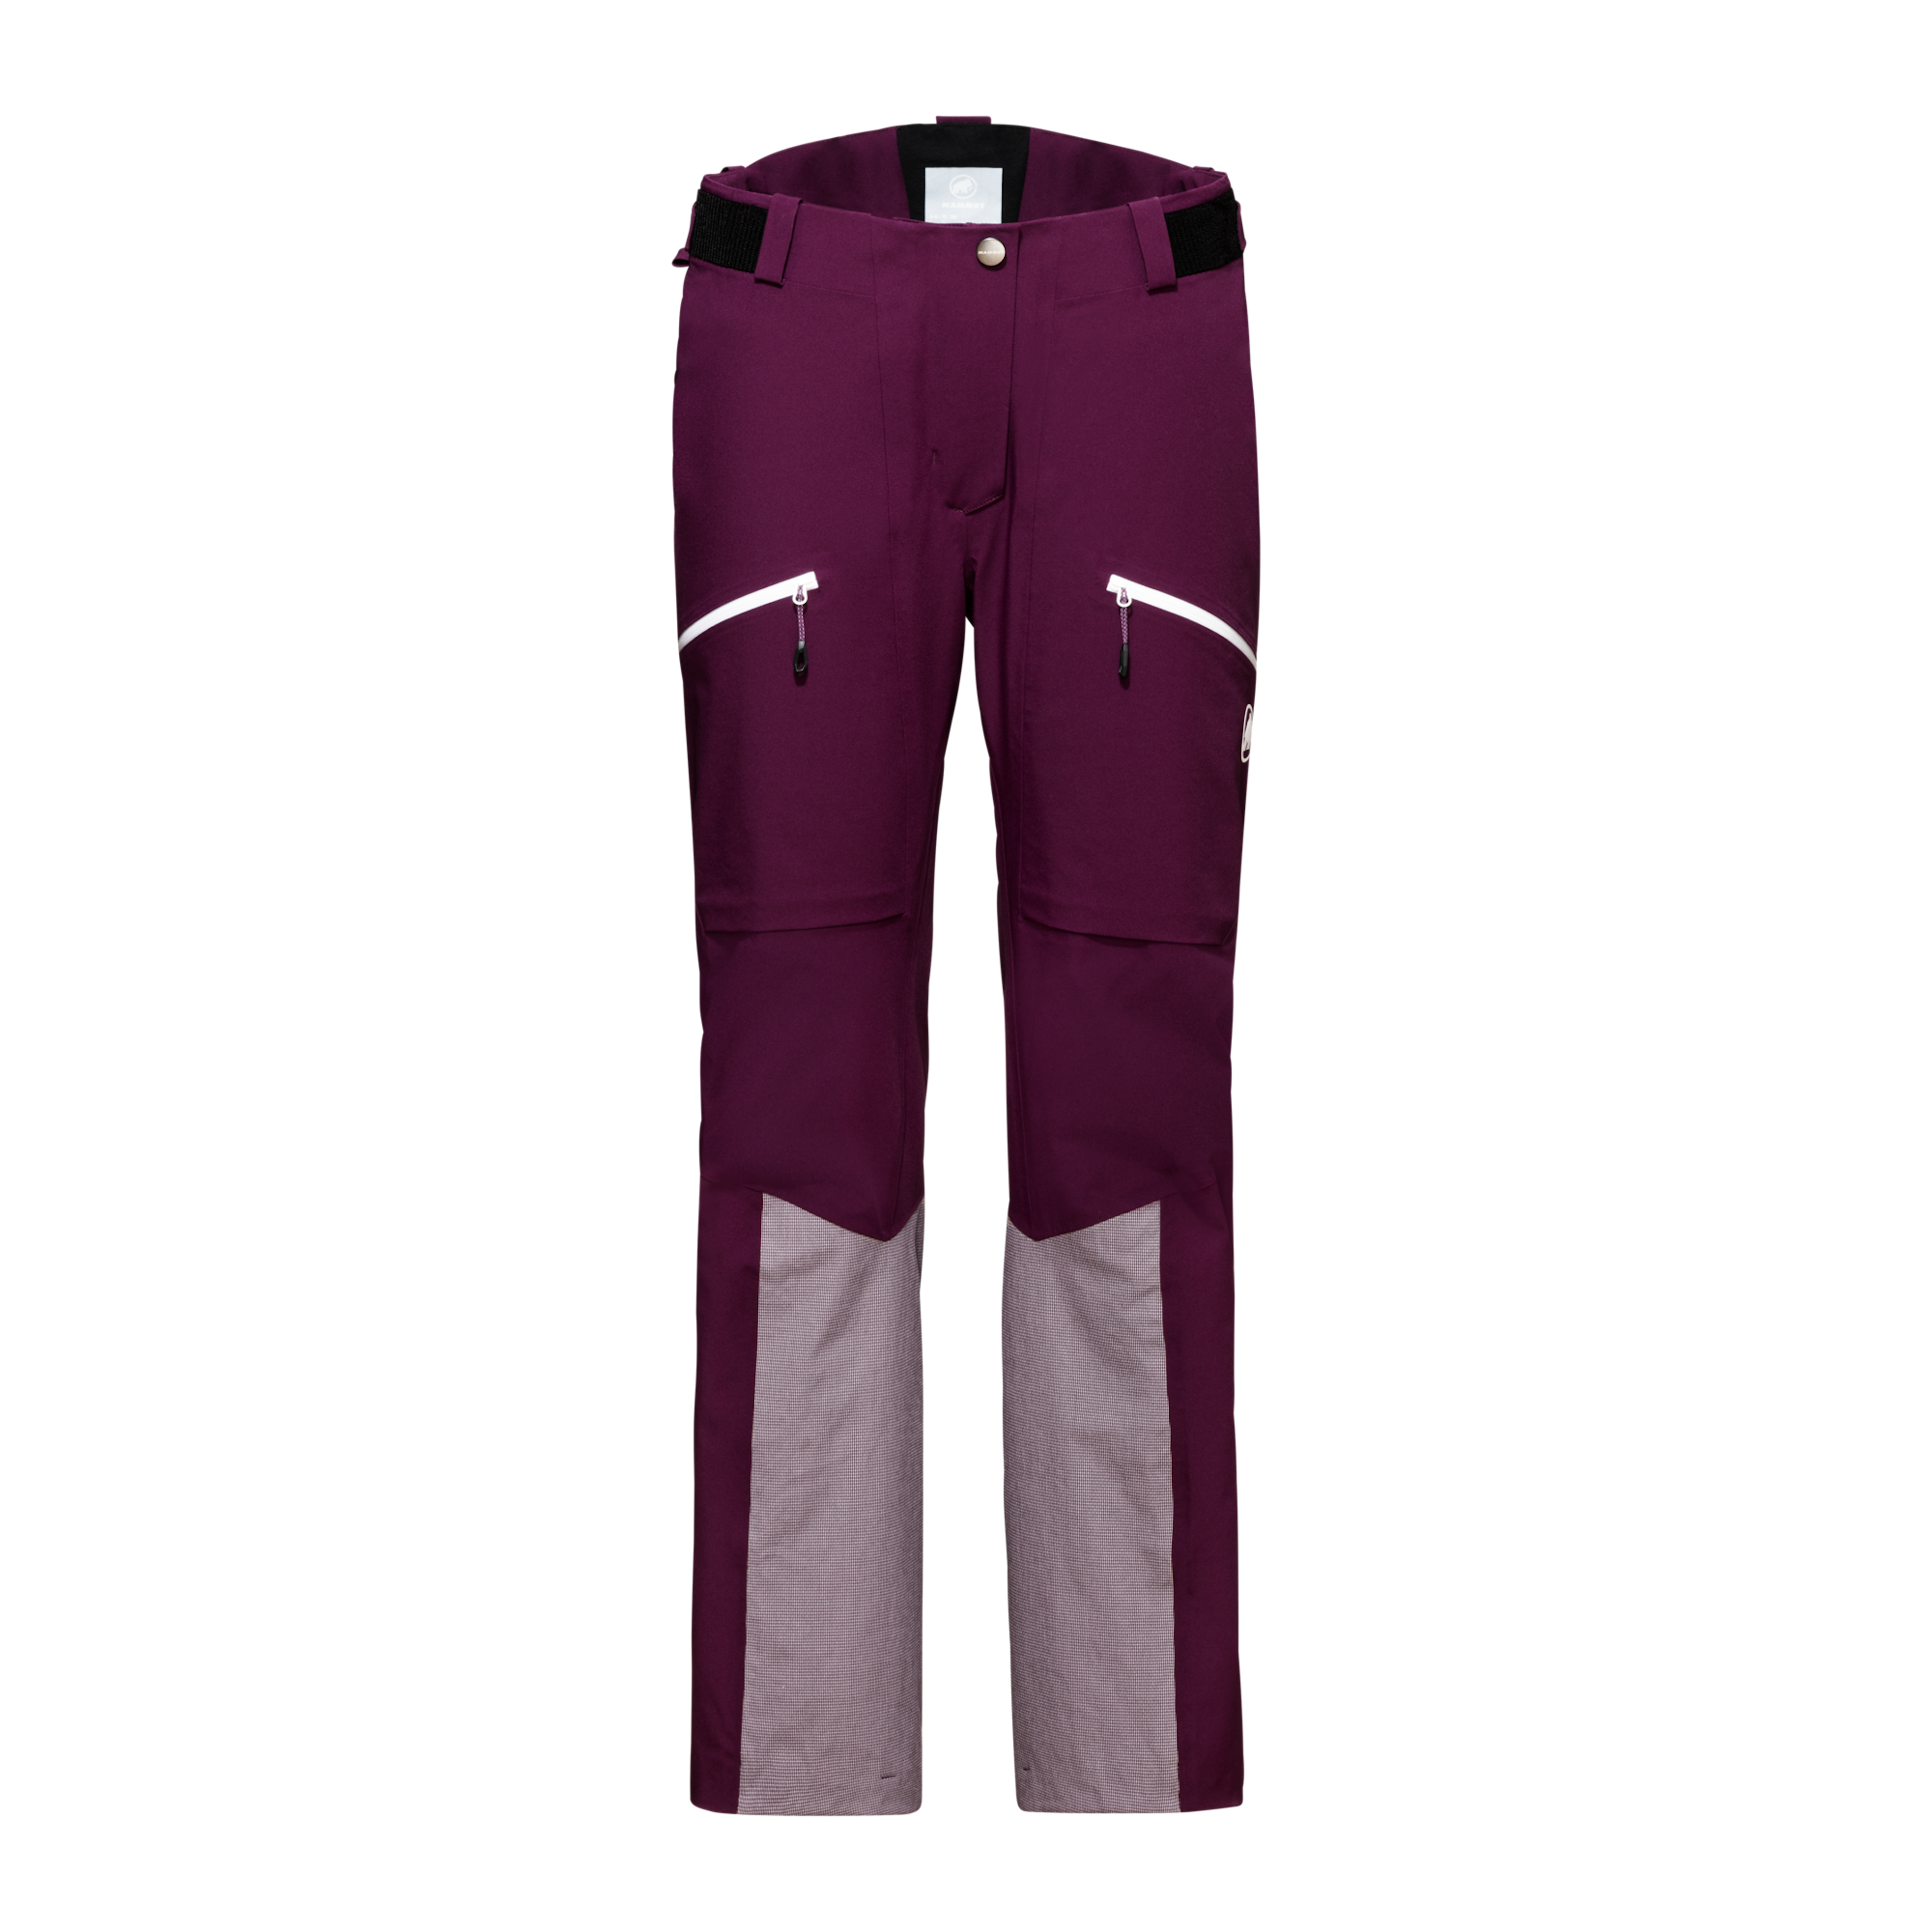 Mammut ski pants in purple